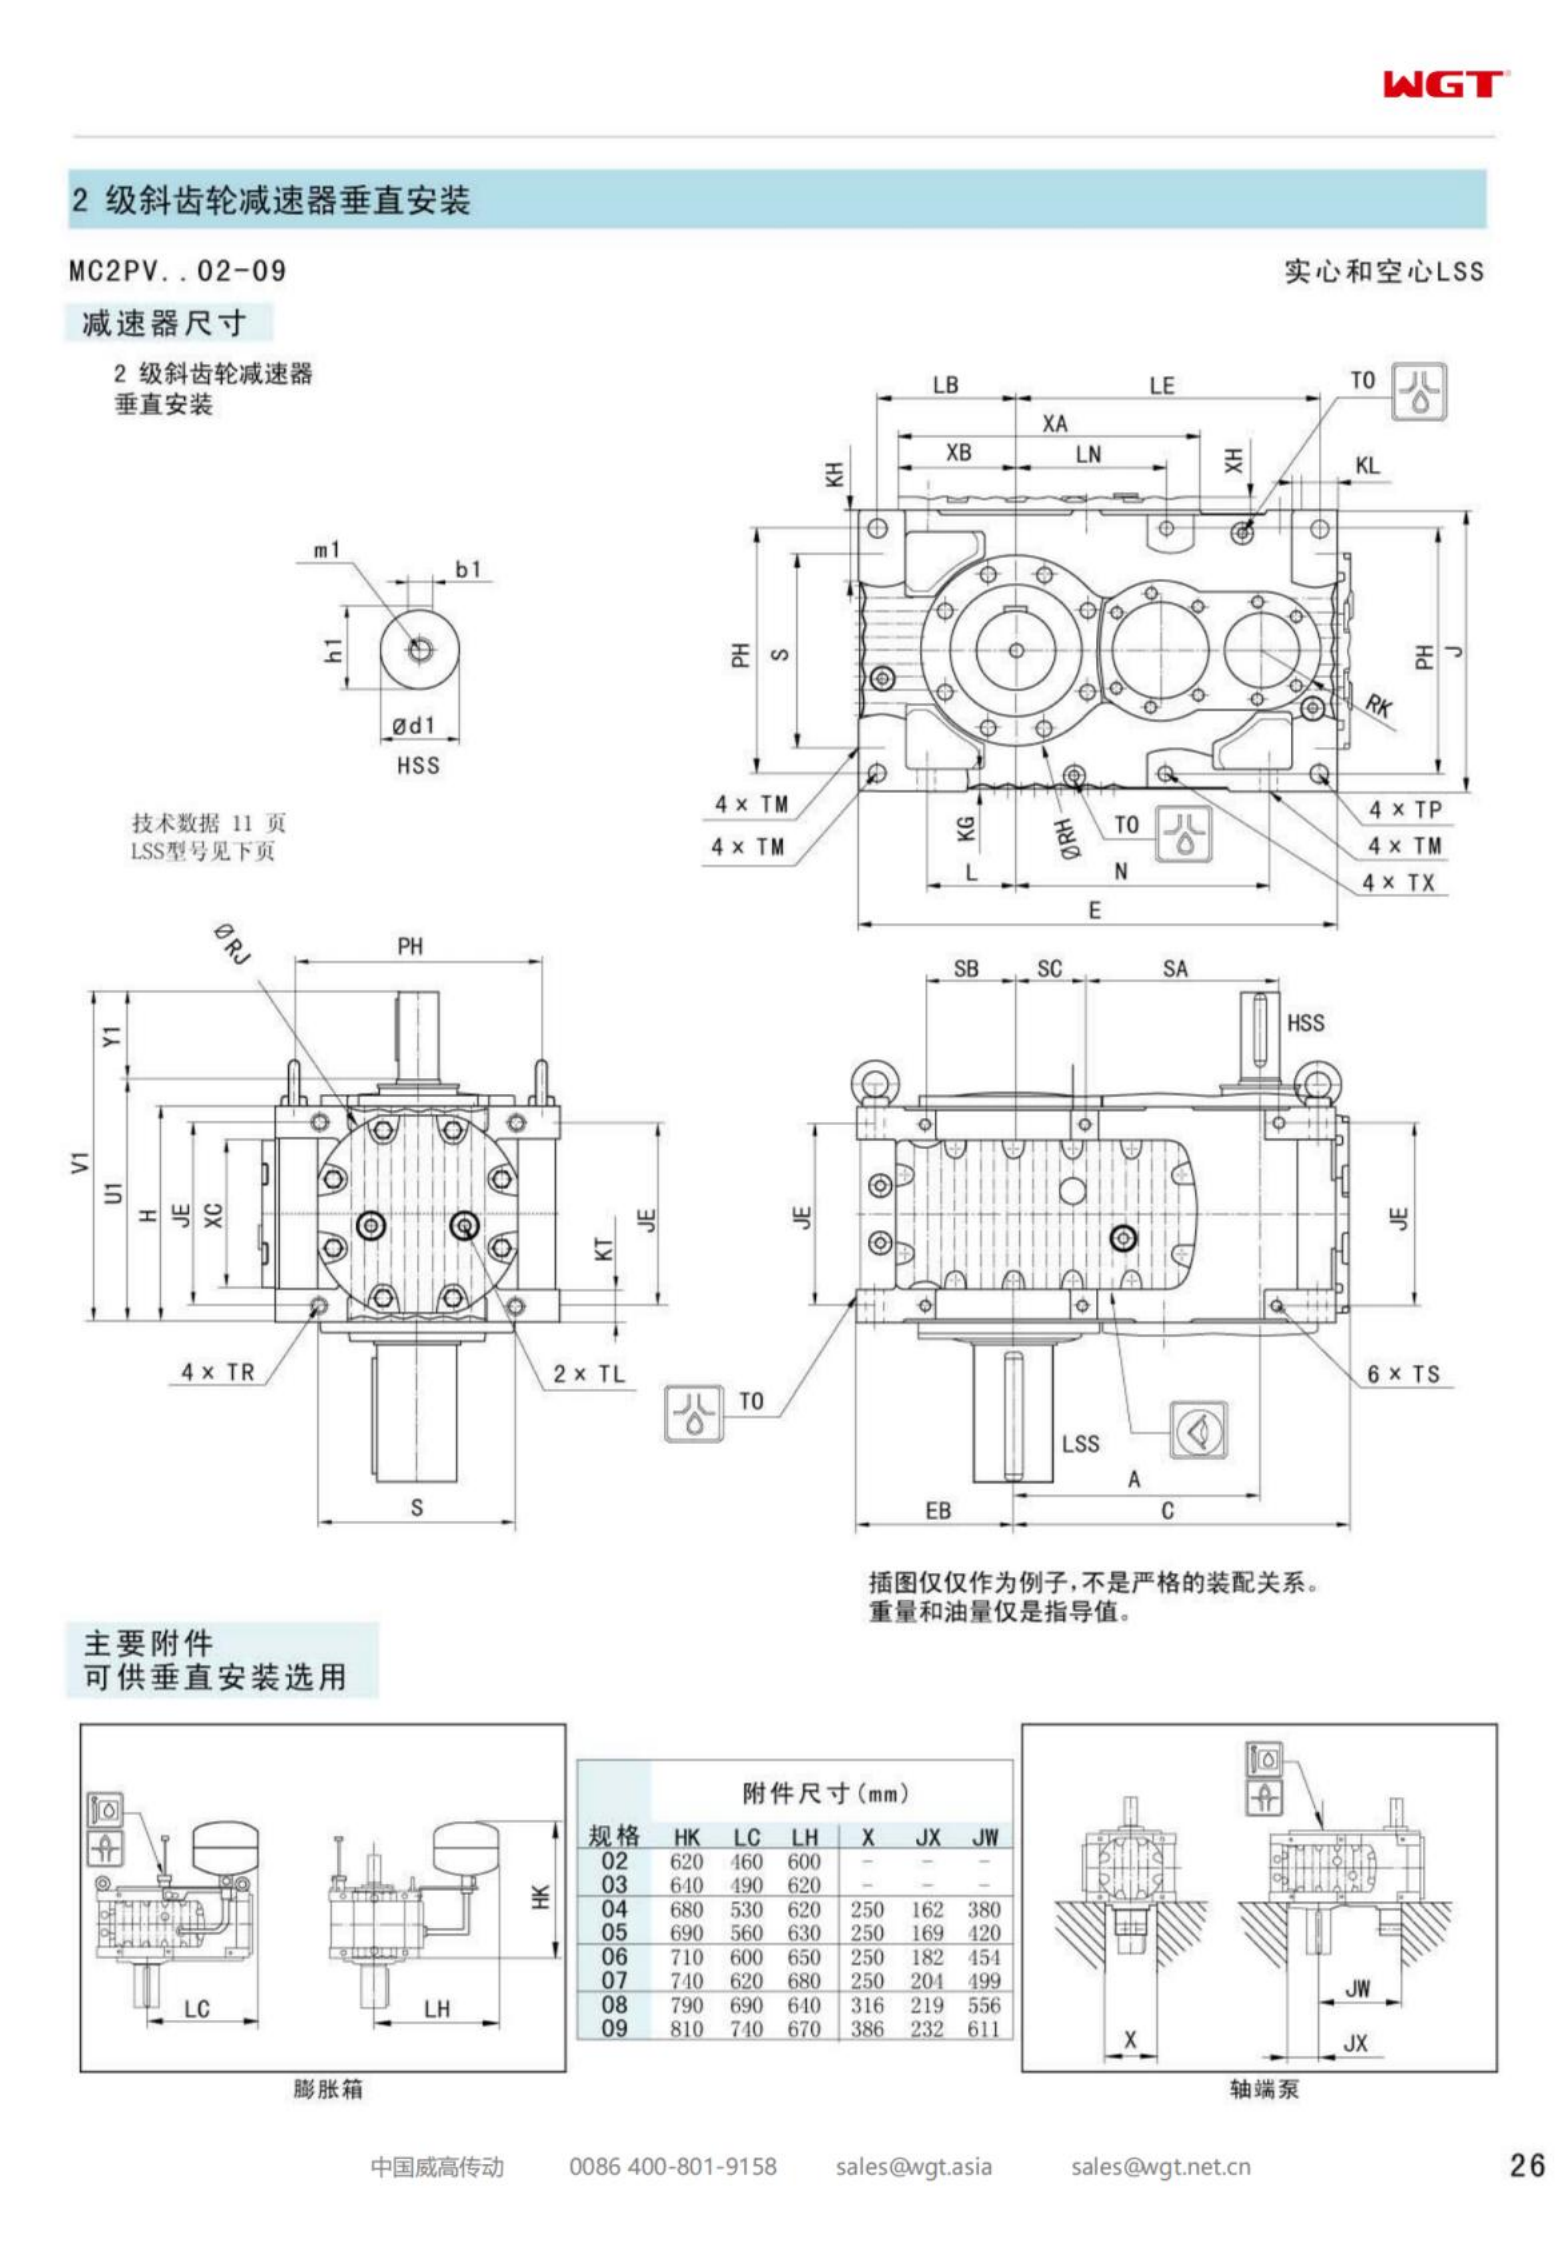 MC2PVST04 replaces _SEW_MC_Series gearbox (patent)